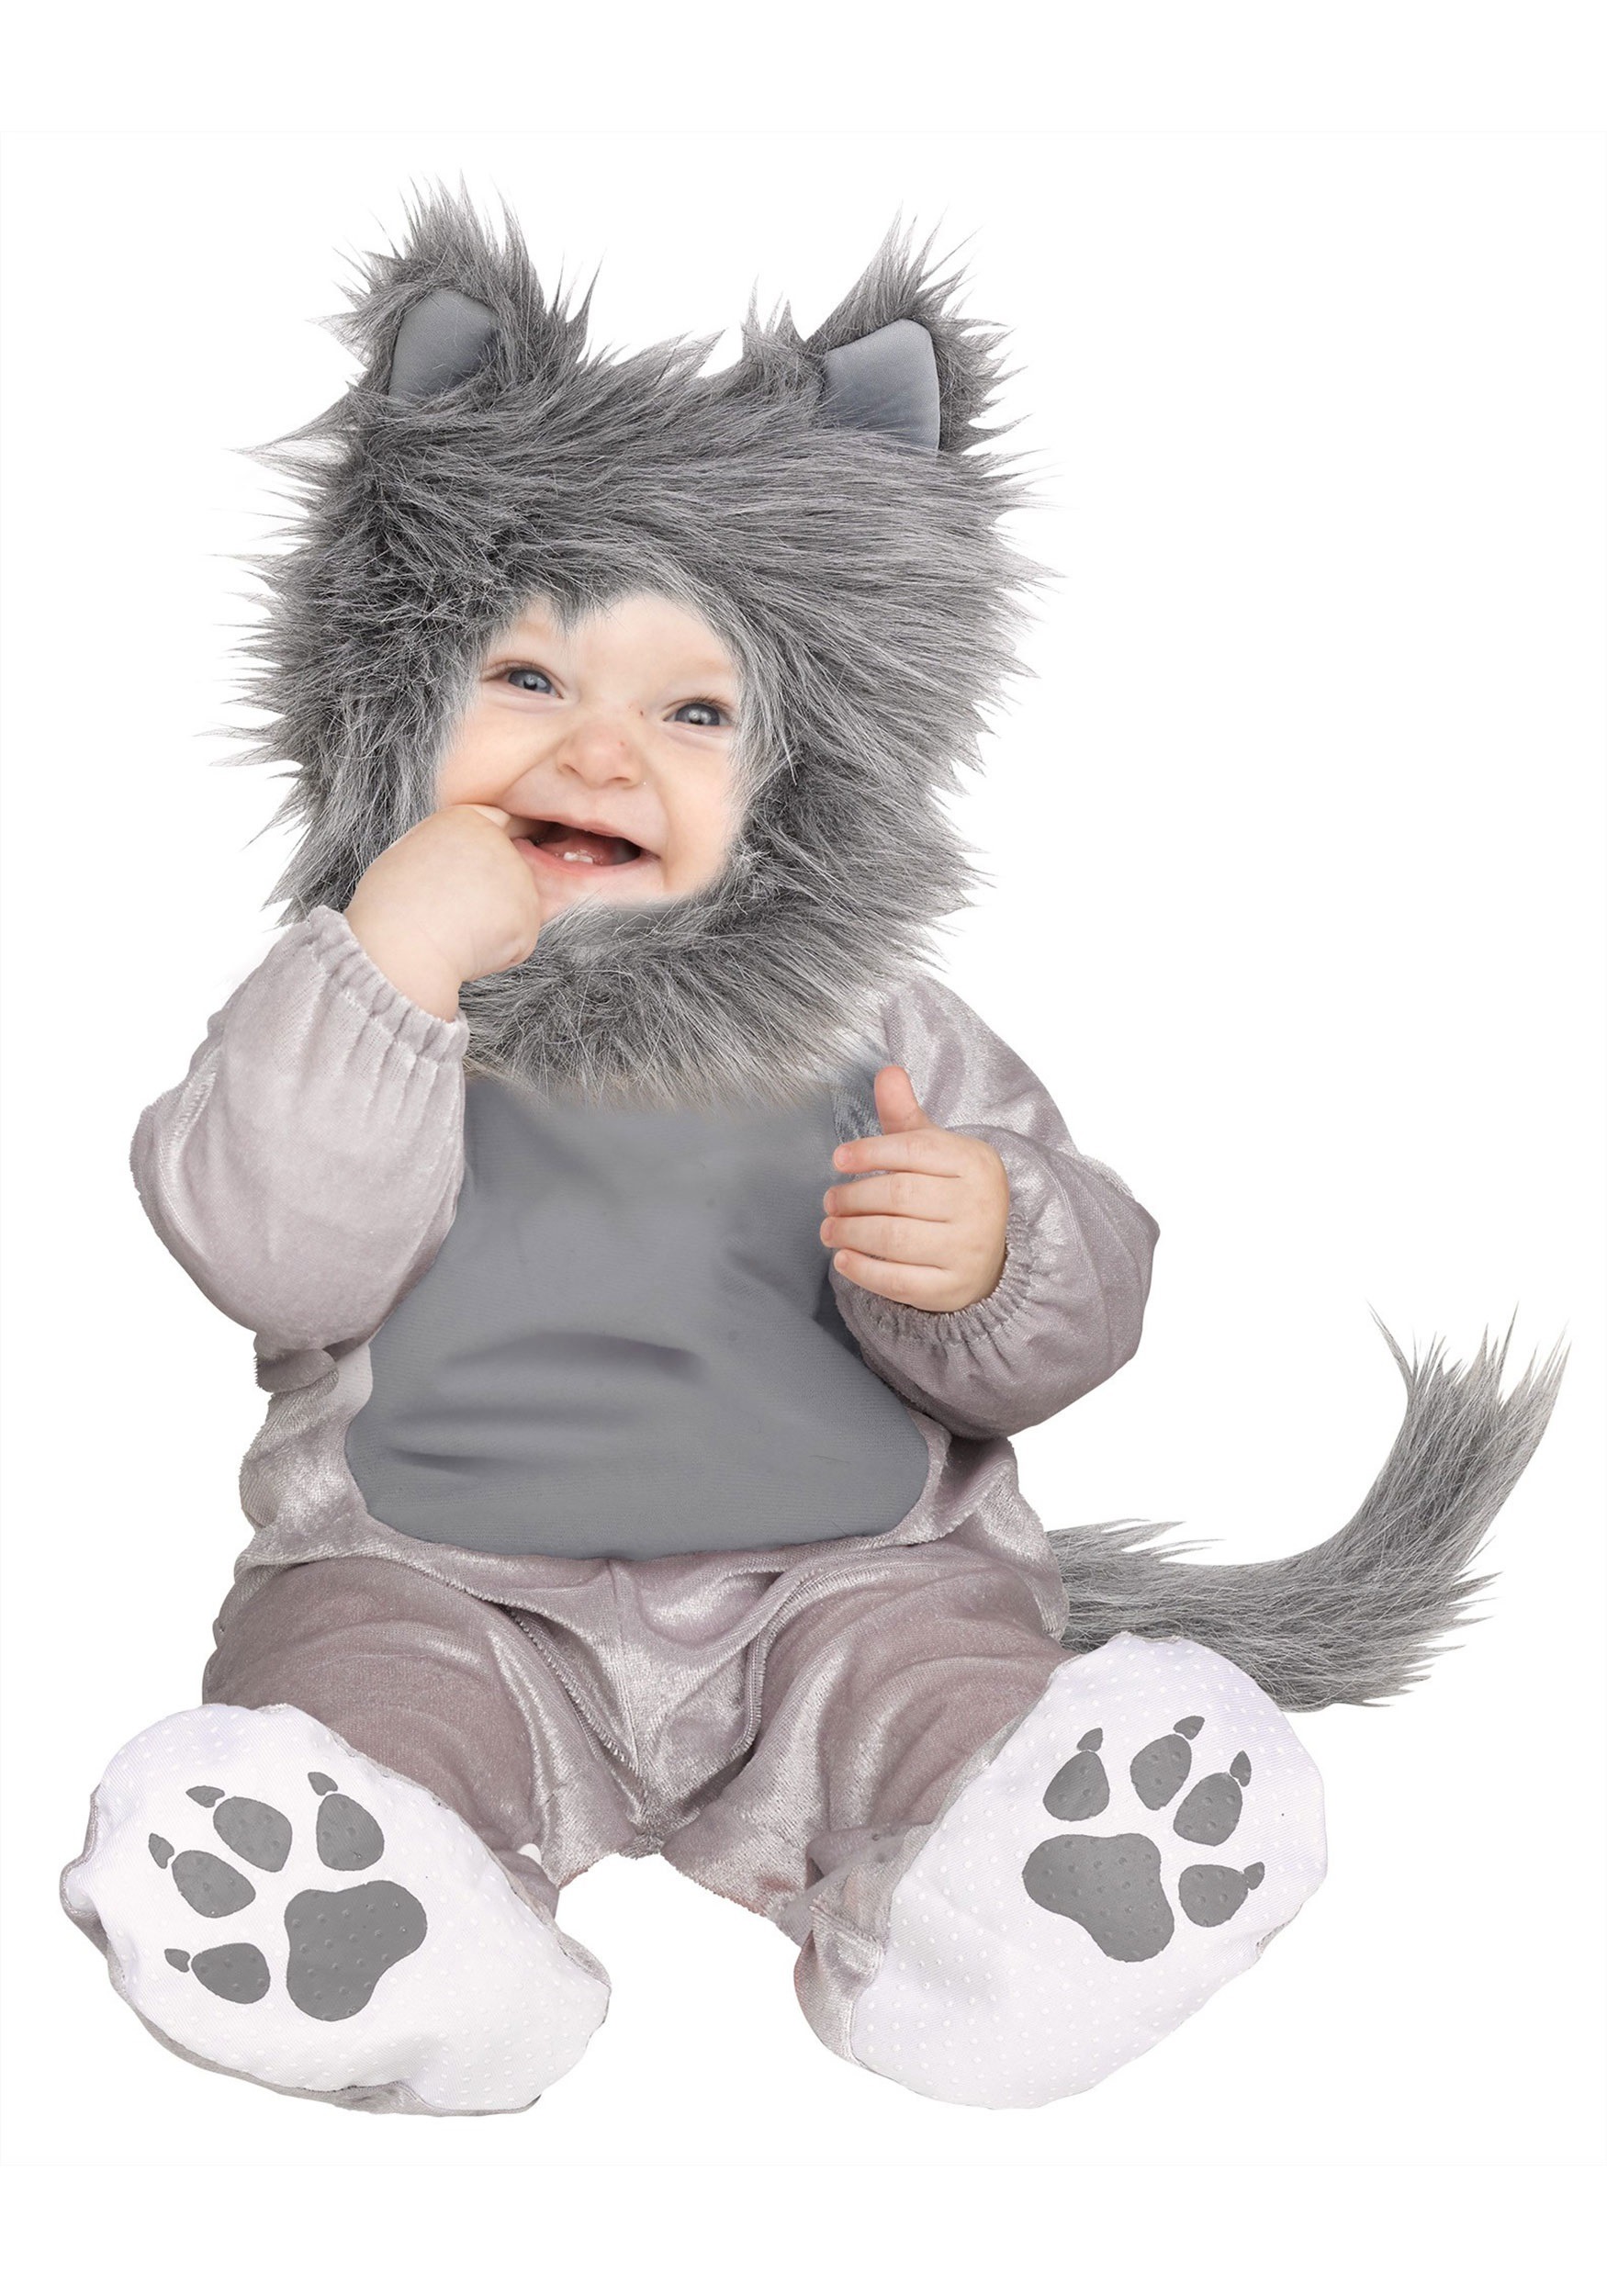 Infant / Toddler Li'l Wolf Cub Costume